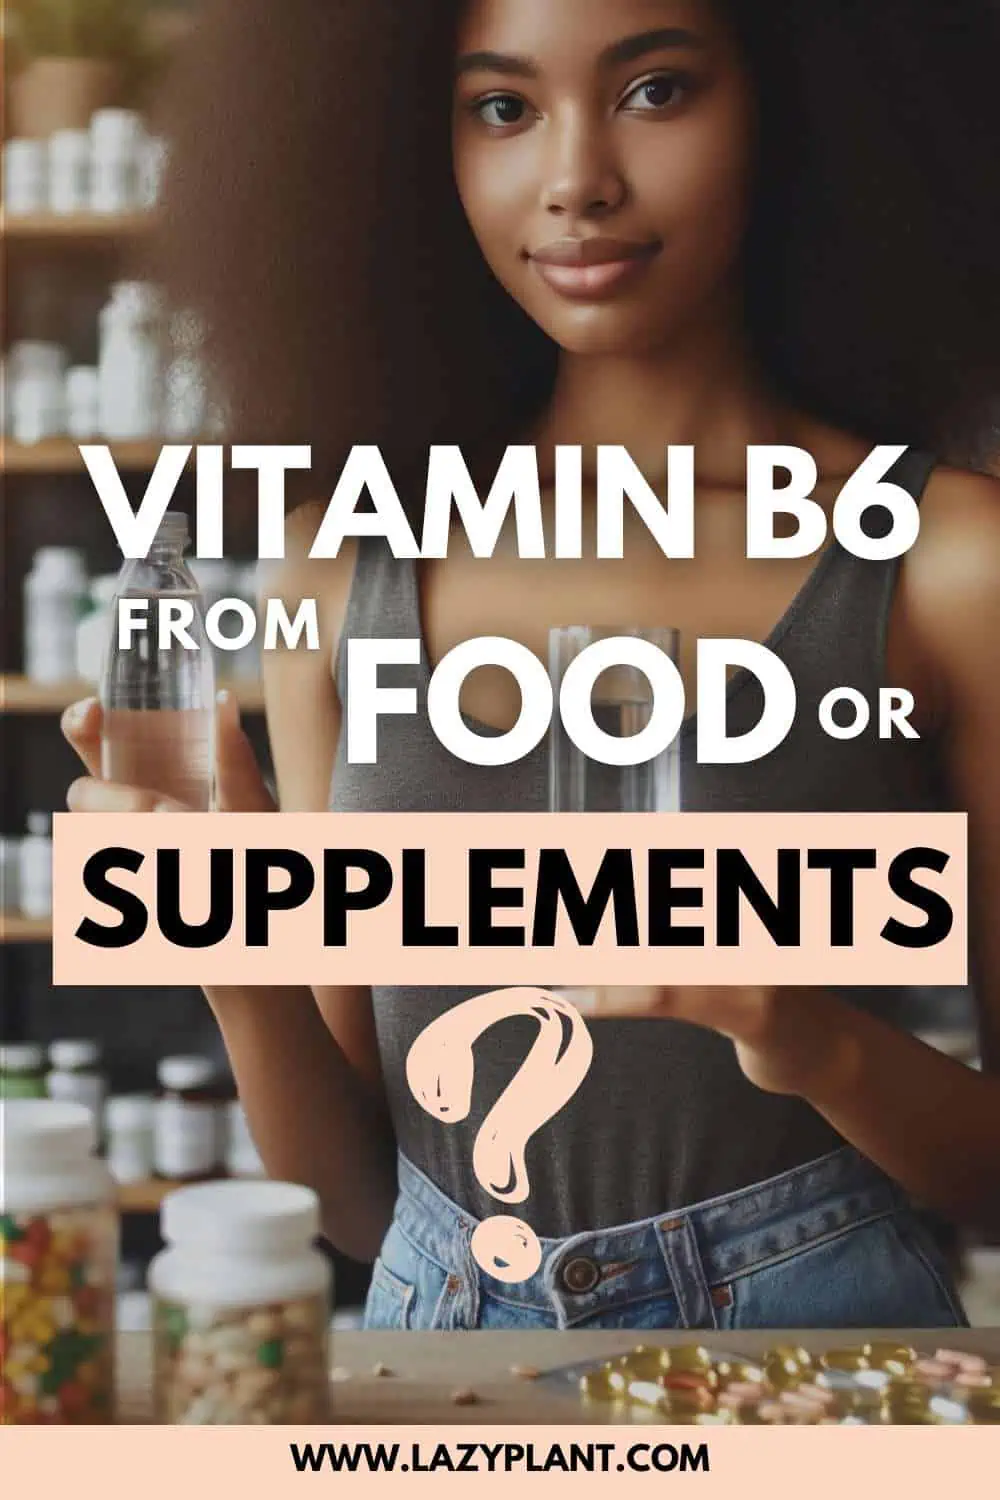 Dangers of Vitamin B6 supplementation.